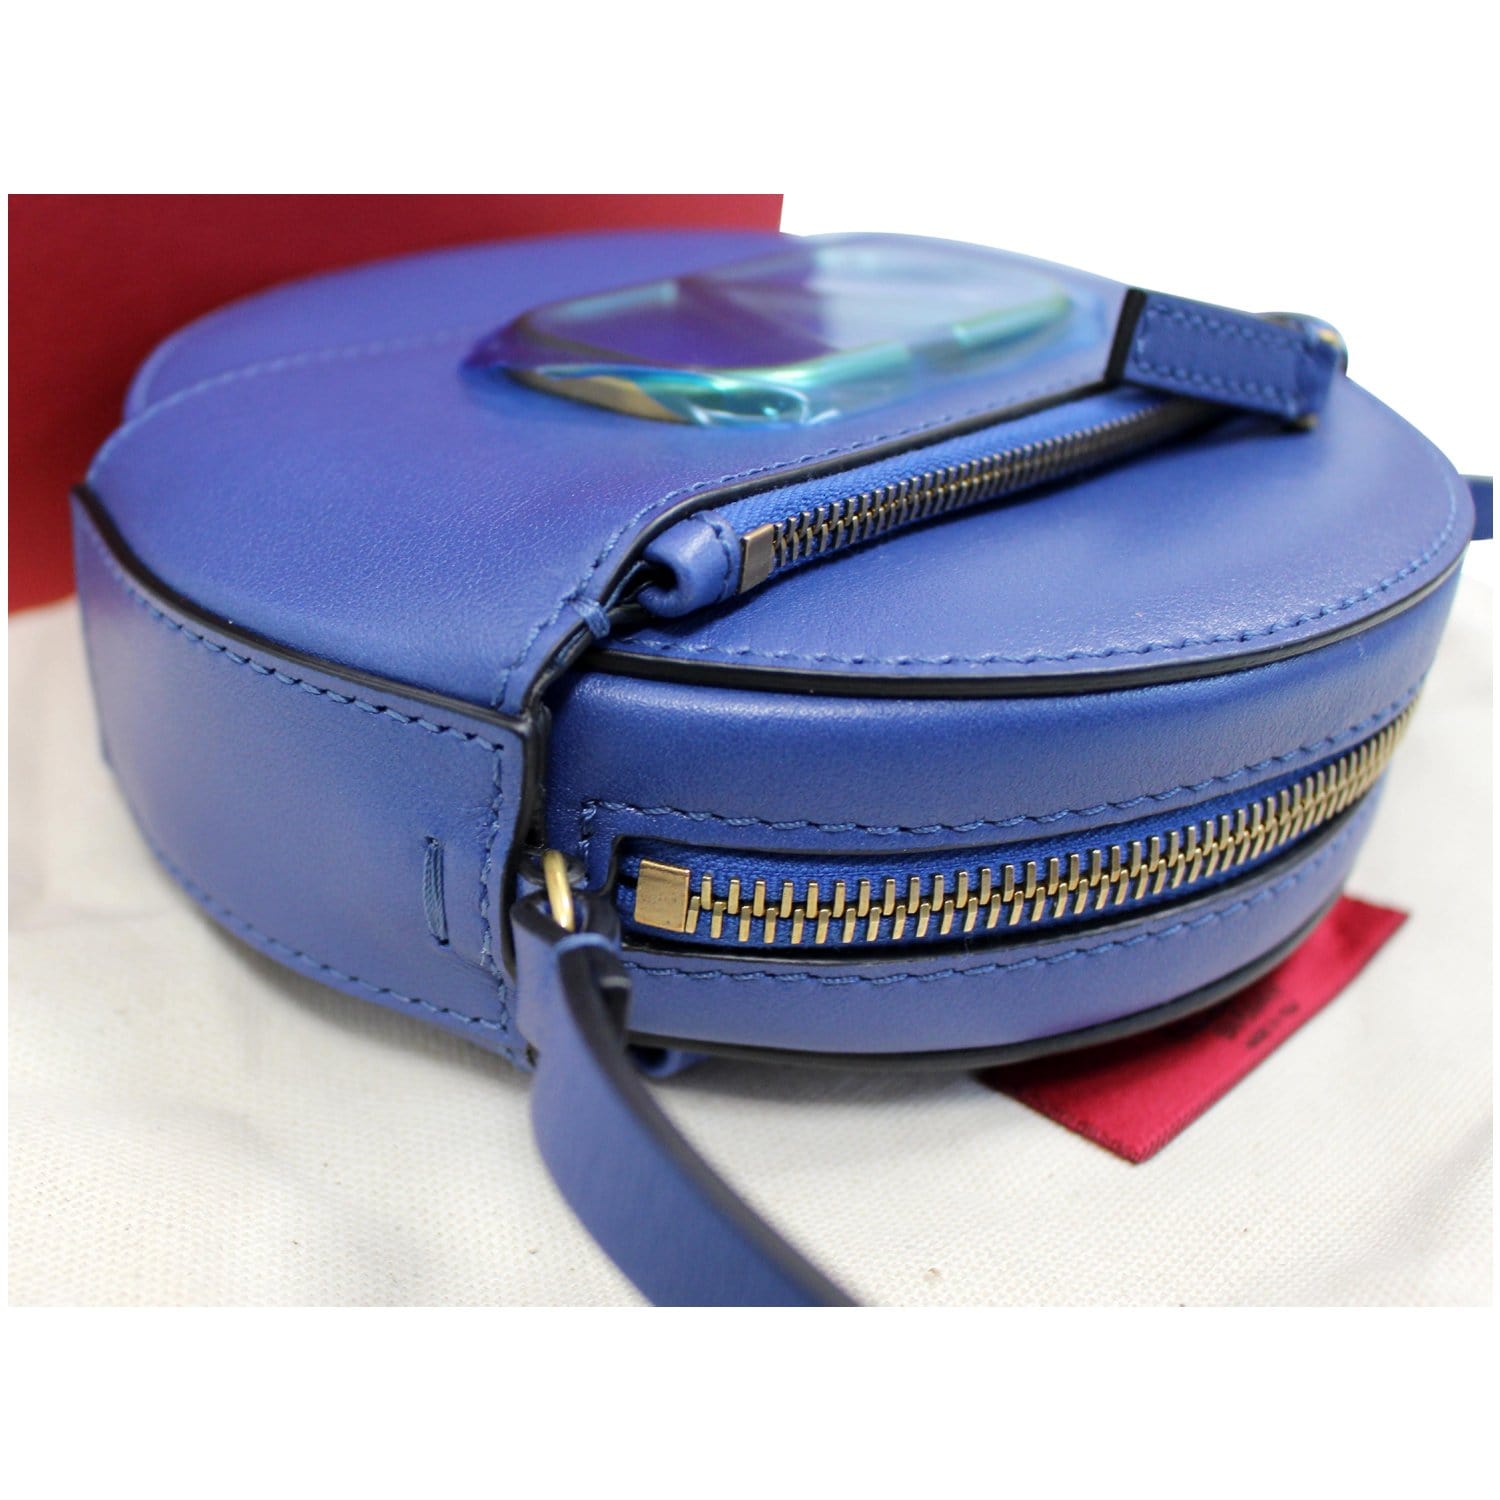 valentino crossbody bag blue